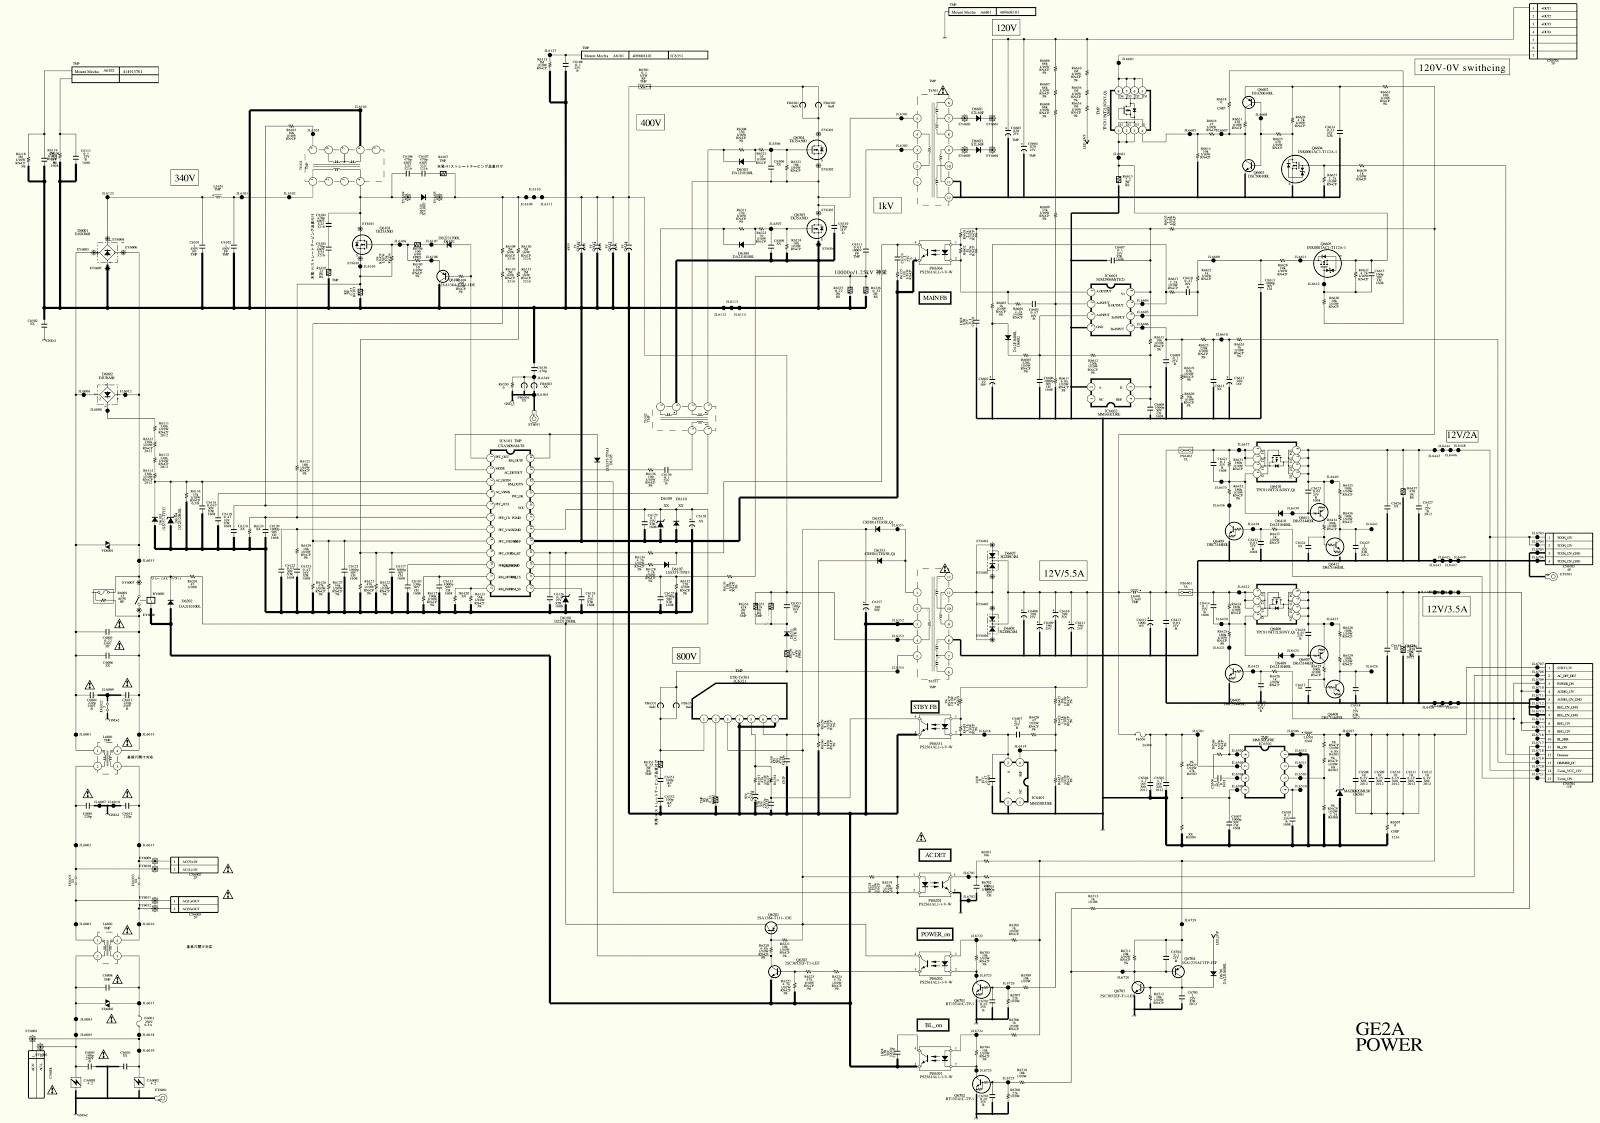 [DIAGRAM] Sony Kdl 46ex600 Schematic Diagram - MYDIAGRAM.ONLINE